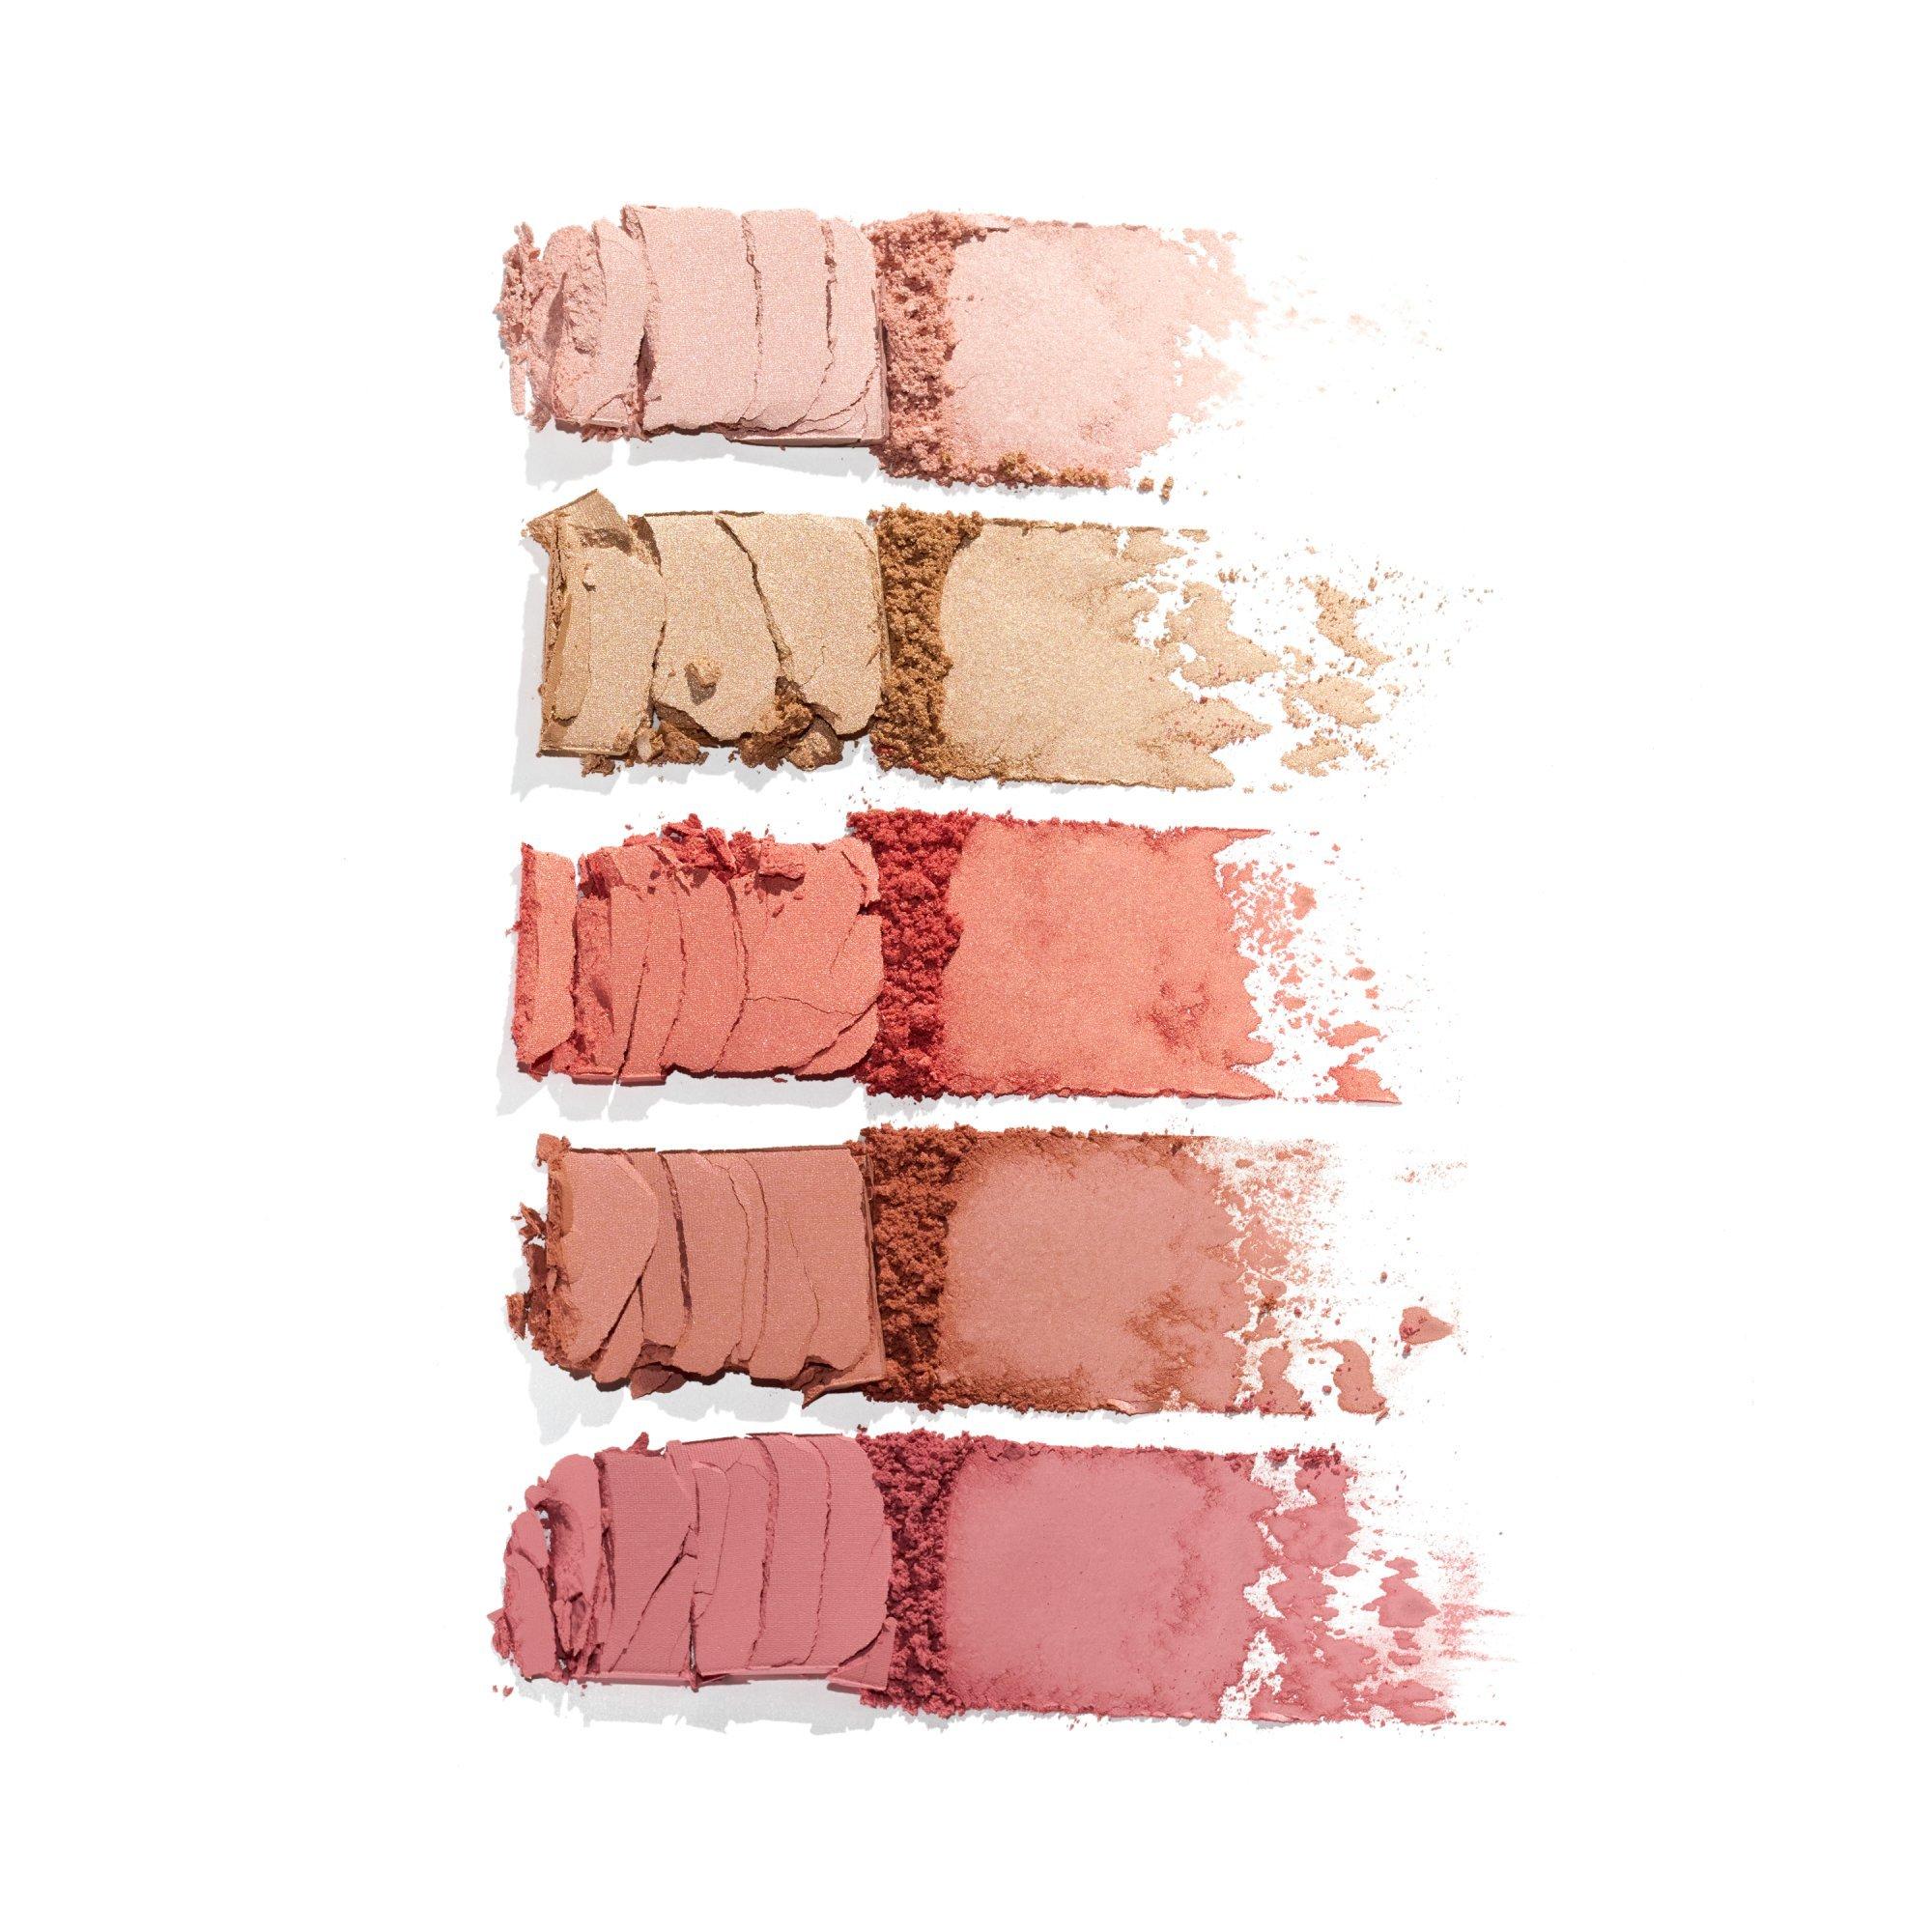 peachy BLOSSOM blush & highlighter palette